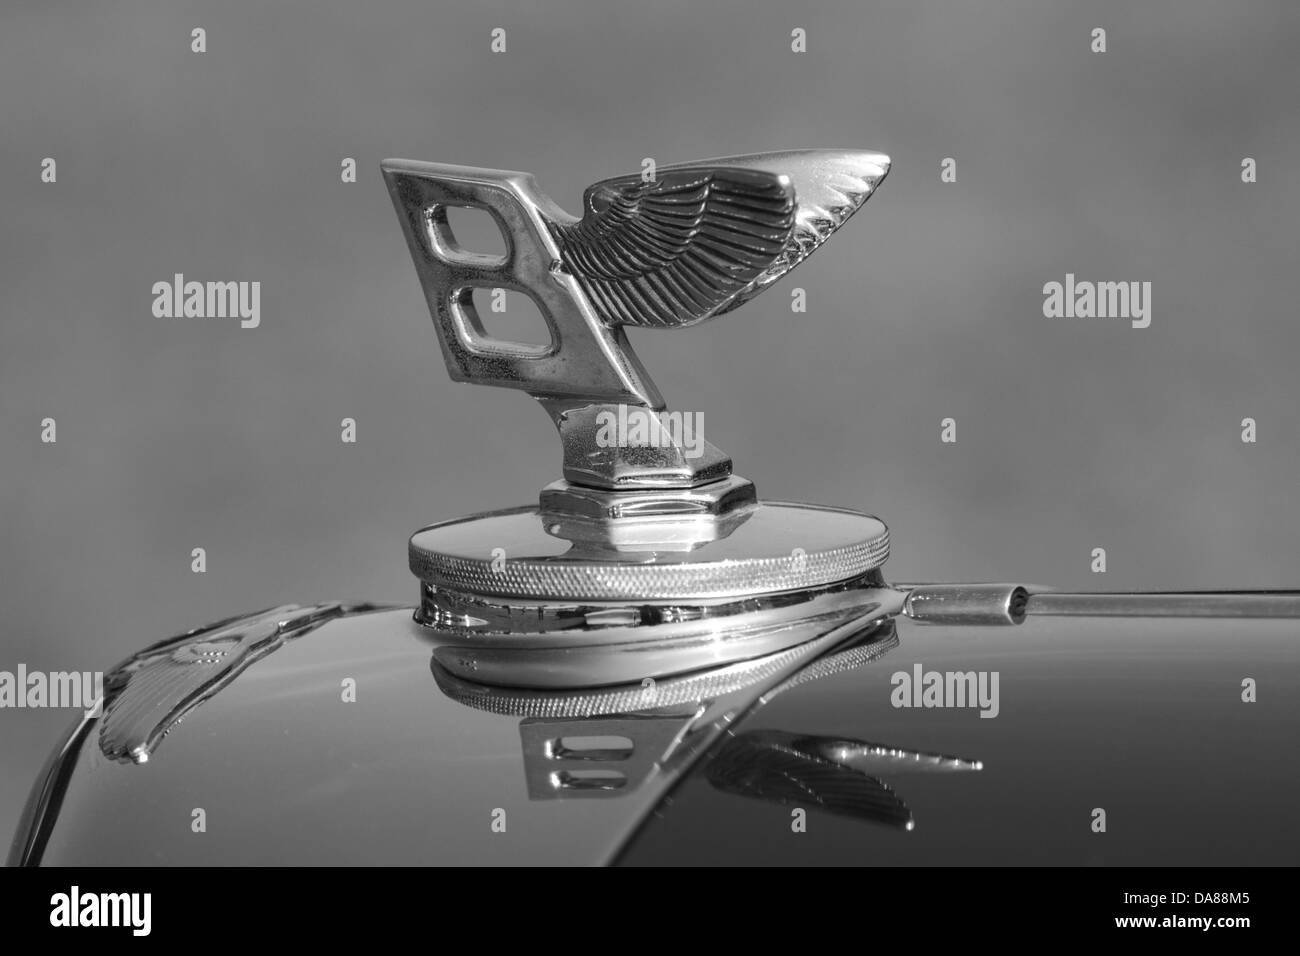 Auto ornamente -Fotos und -Bildmaterial in hoher Auflösung – Alamy